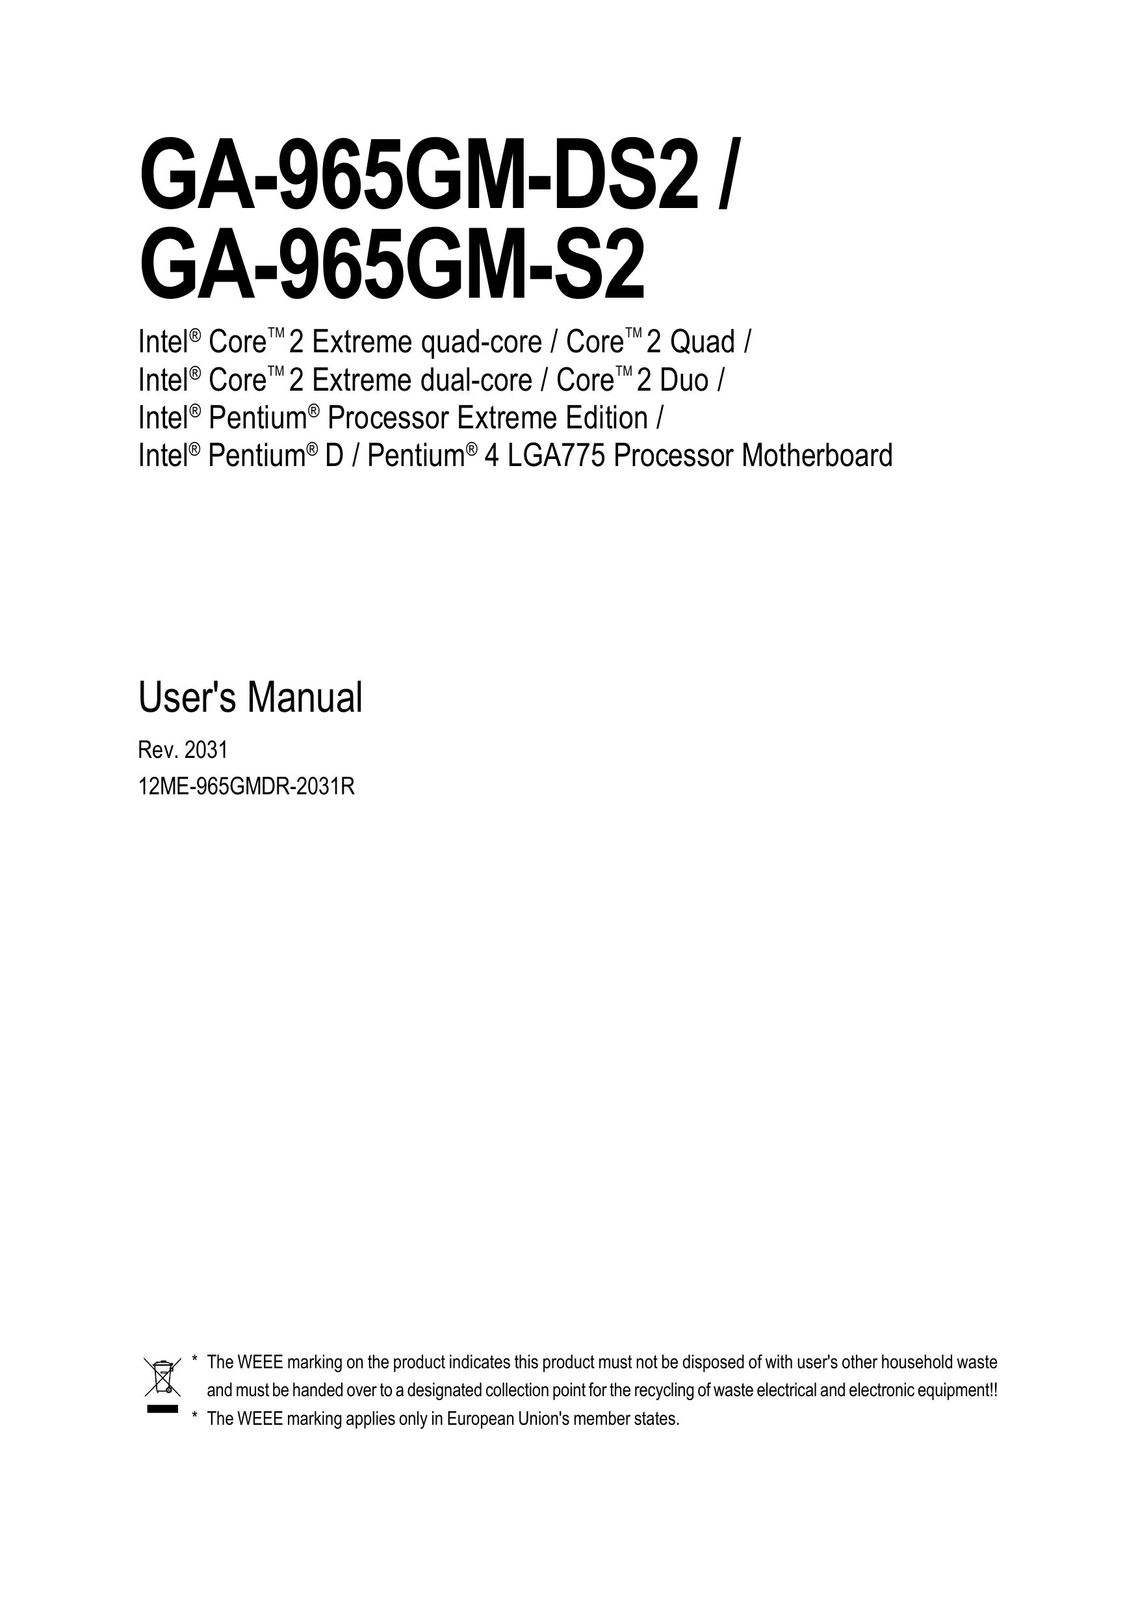 Gigabyte GA-965GM-DS2 Computer Hardware User Manual